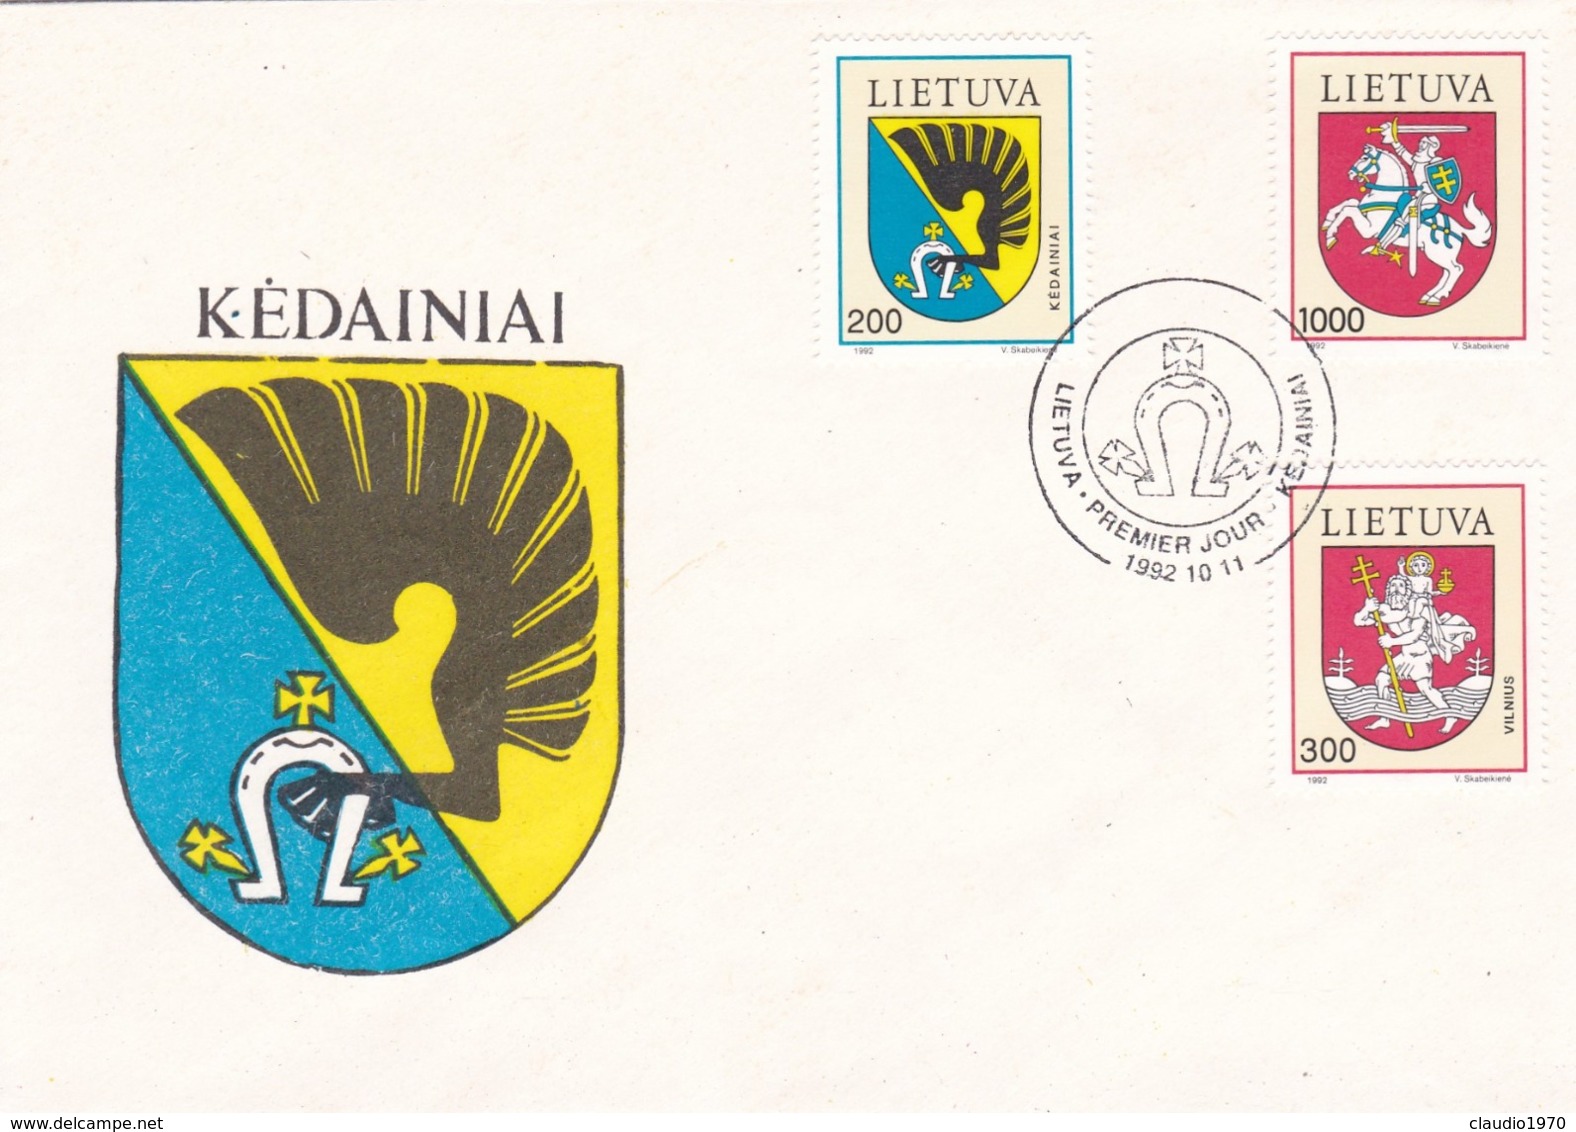 BUSTA FDC - LITUANIA - KEDAINIAI - 1992 - Lithuania